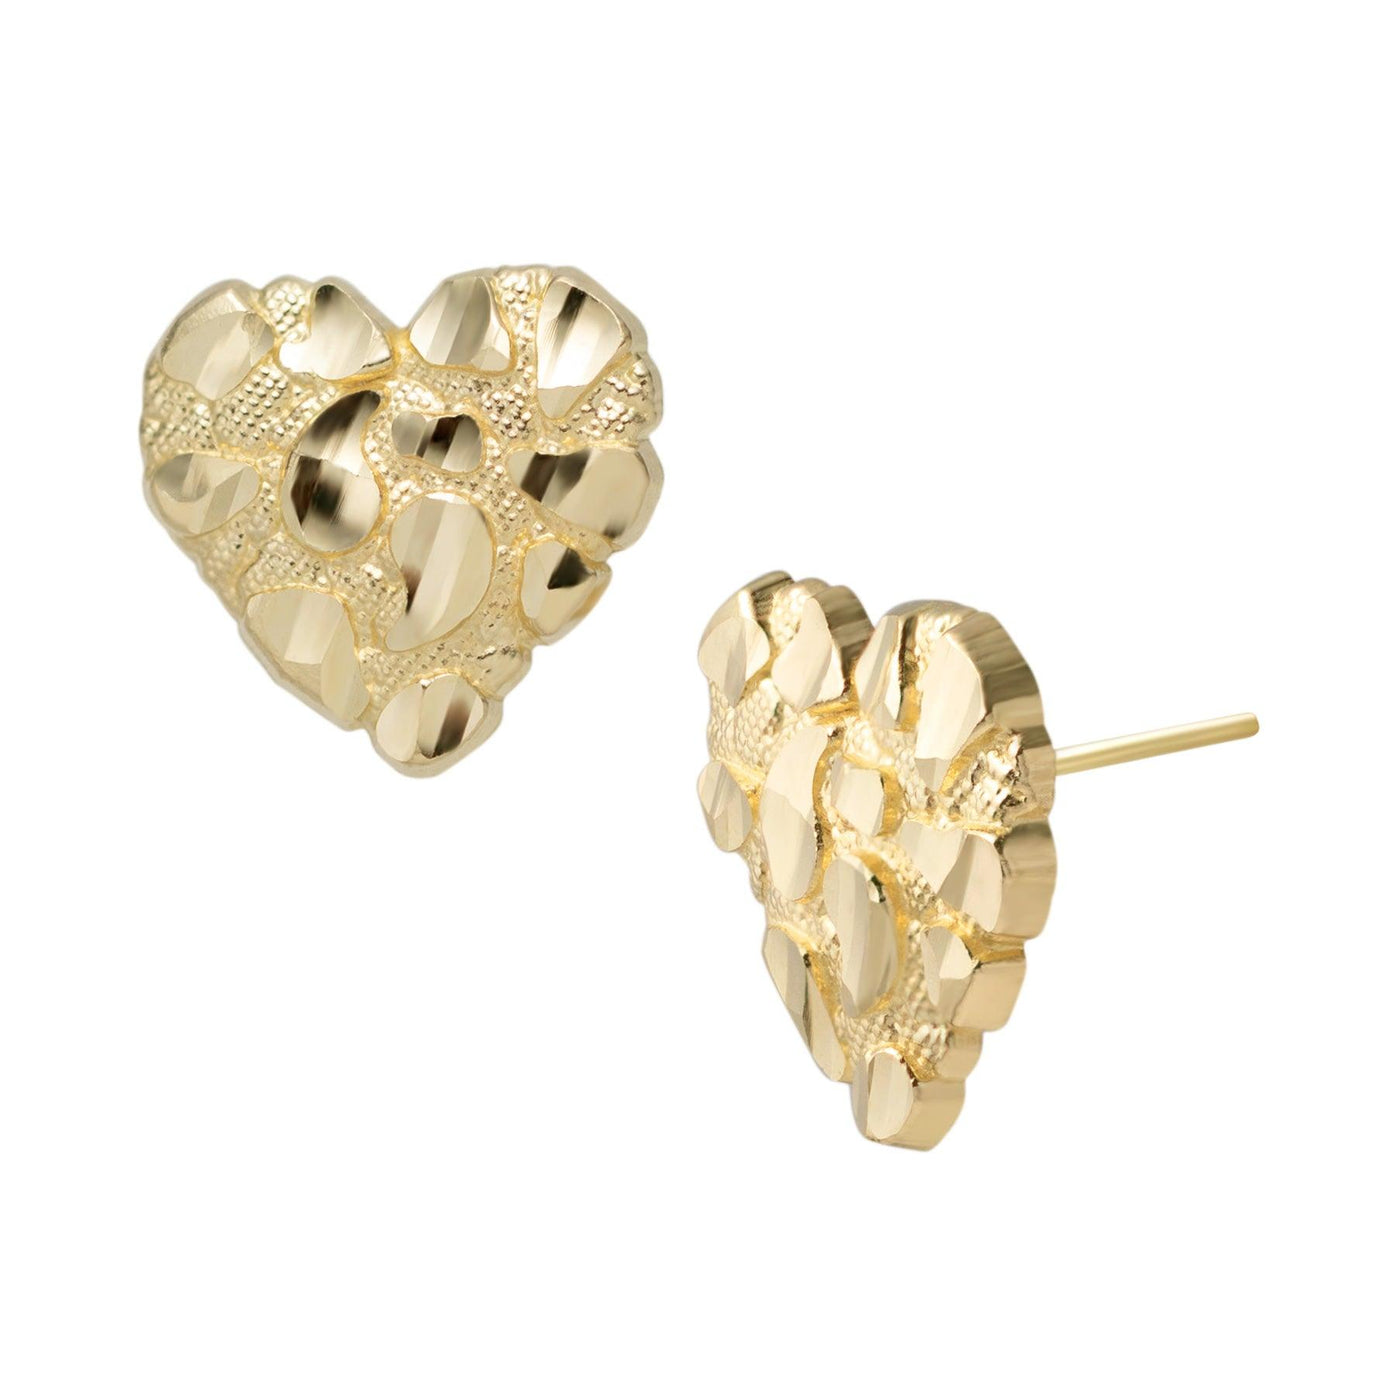 1/4" Women's Heart Nugget Stud Earrings Solid 10K Yellow Gold - bayamjewelry